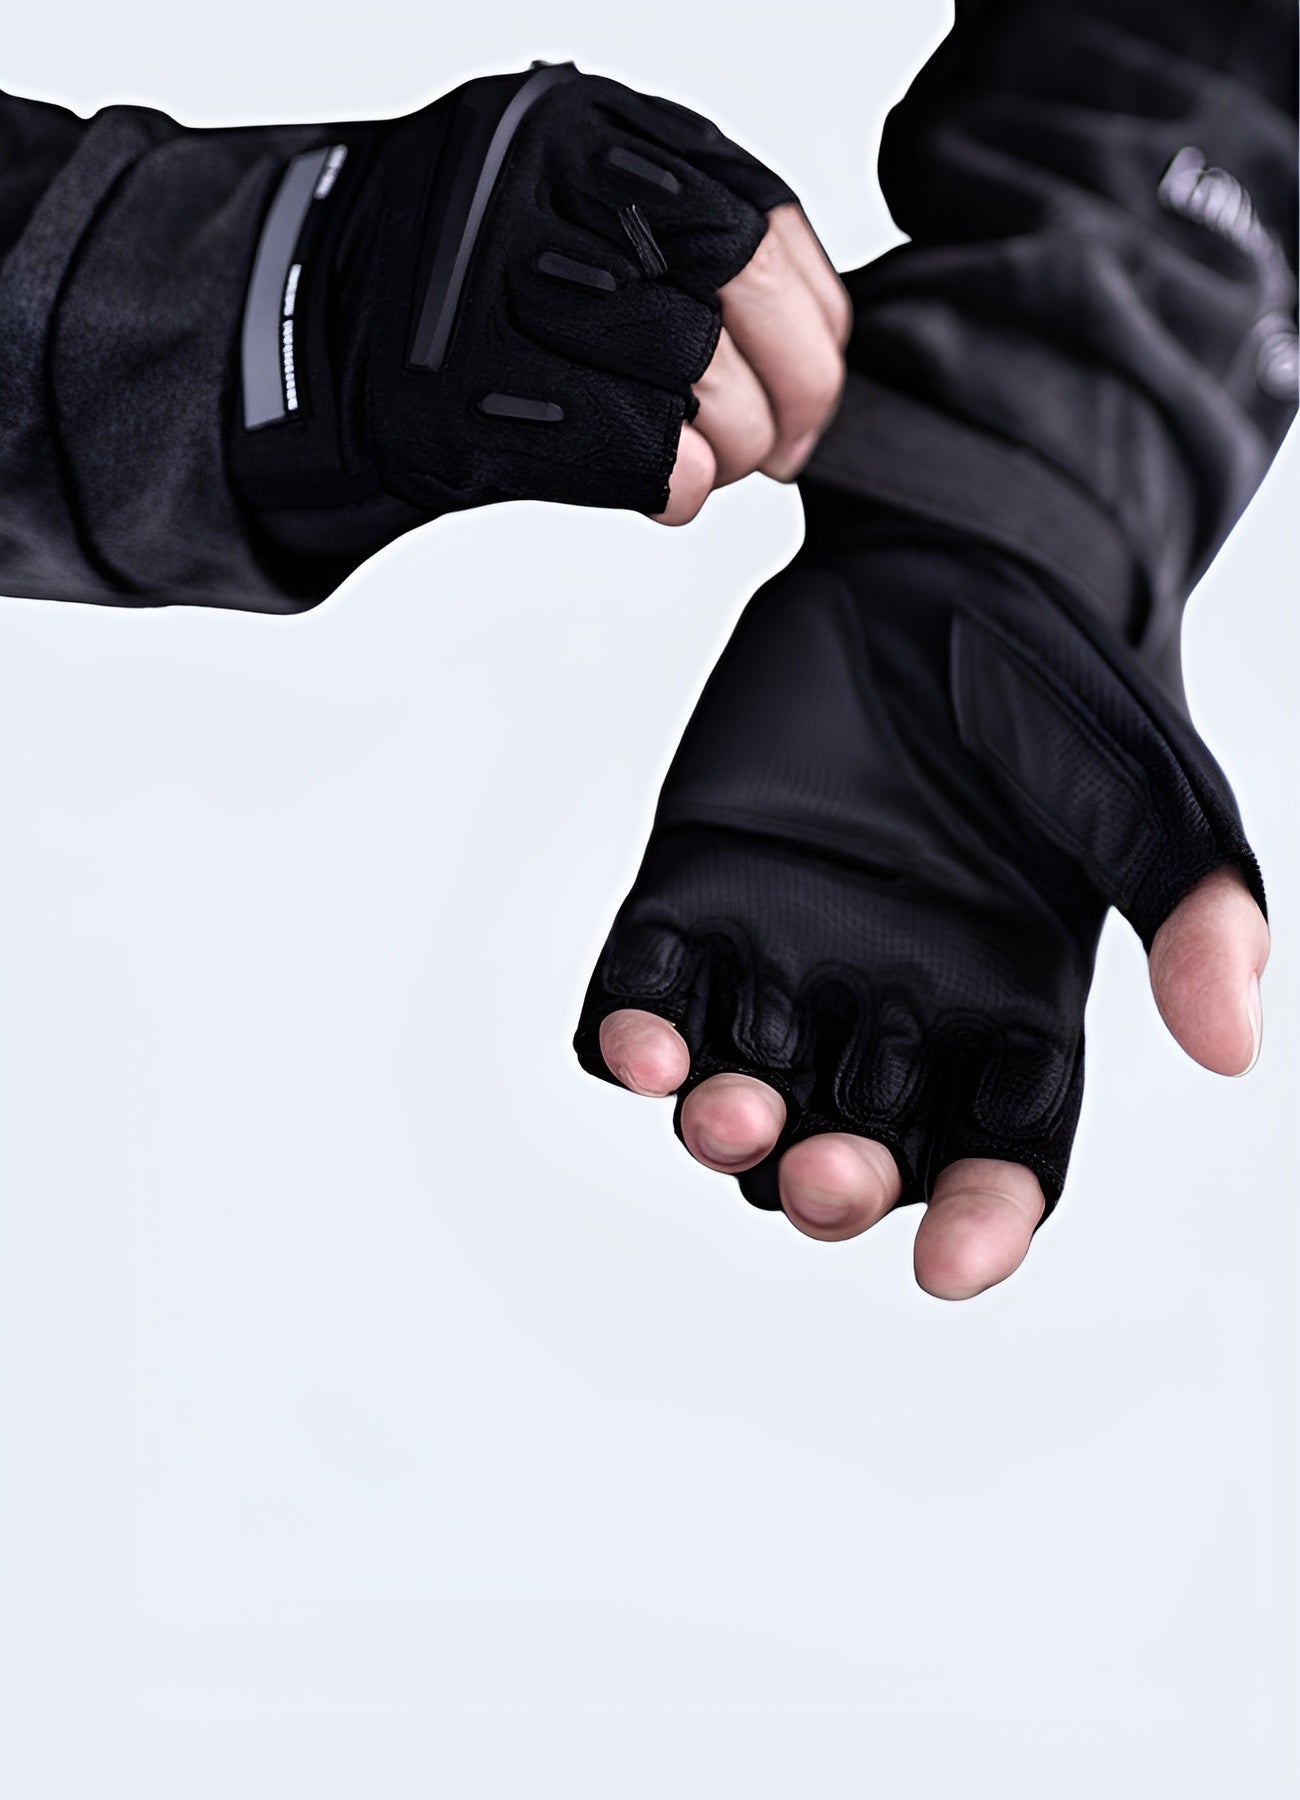 Fingerless street style gloves mean wearing black front side view.